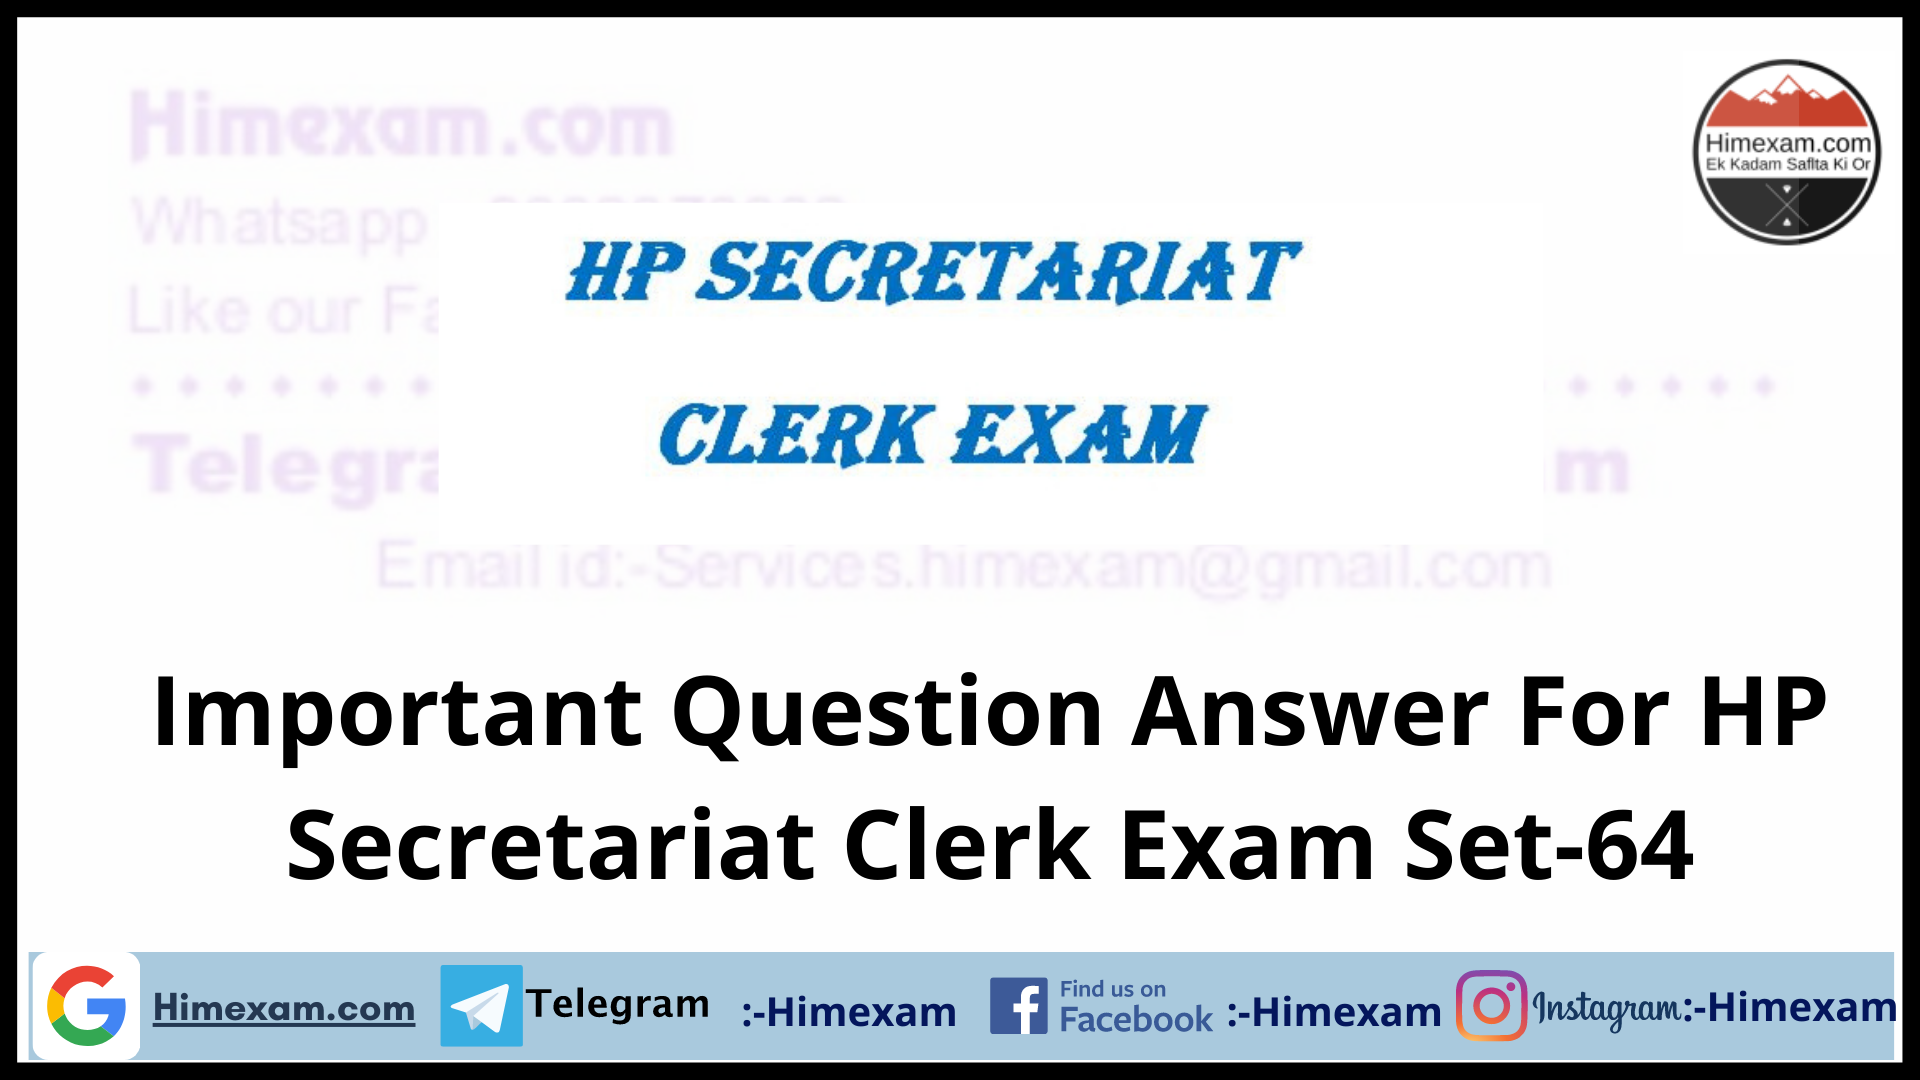 Important Question Answer For HP Secretariat Clerk Exam Set-64